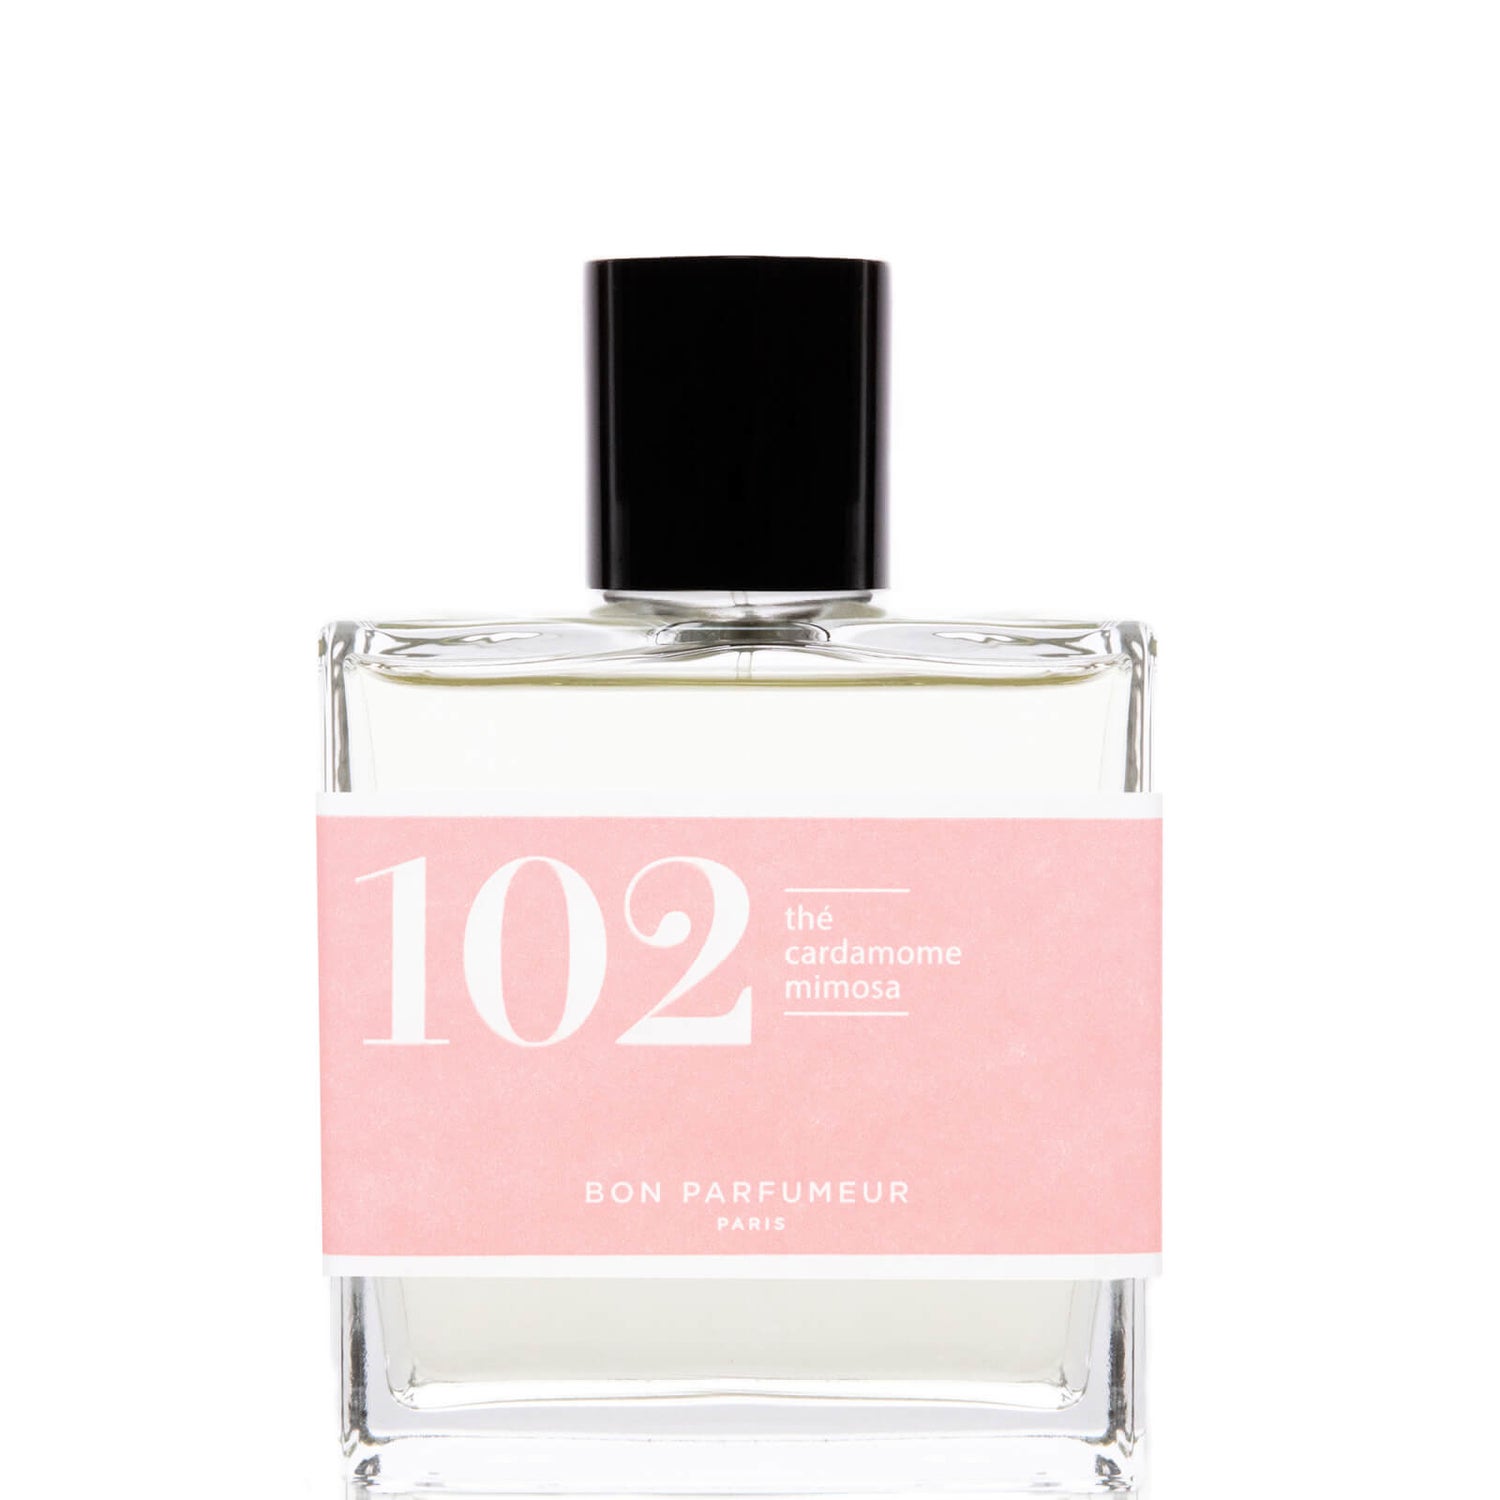 Bon Parfumeur 102 Ceai Cardamom Mimosa Apă de parfum - 100ml